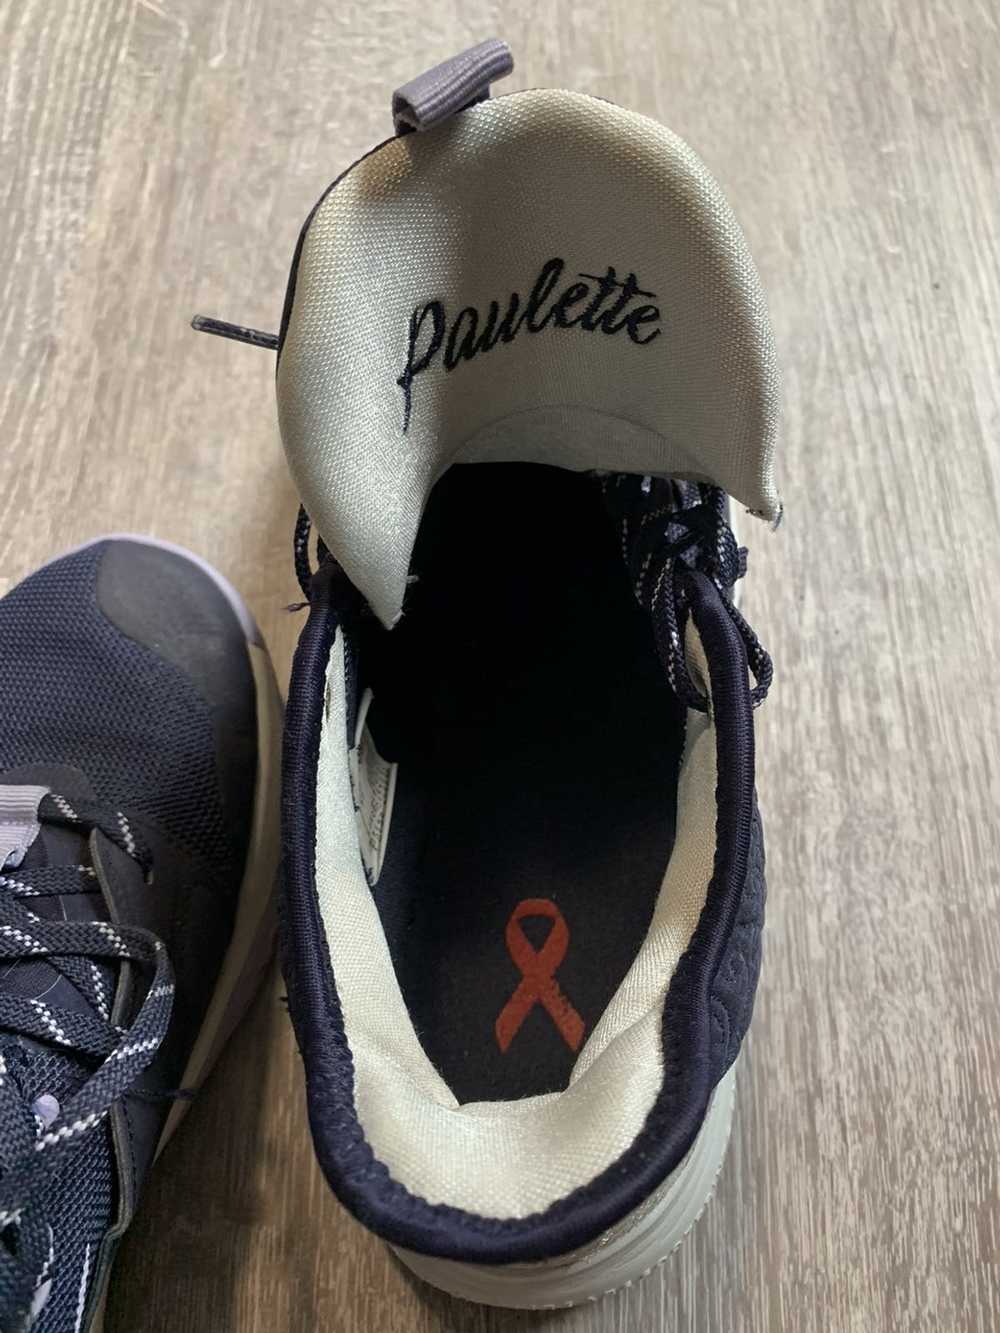 Nike PG 3 Paulette 2019 - image 5